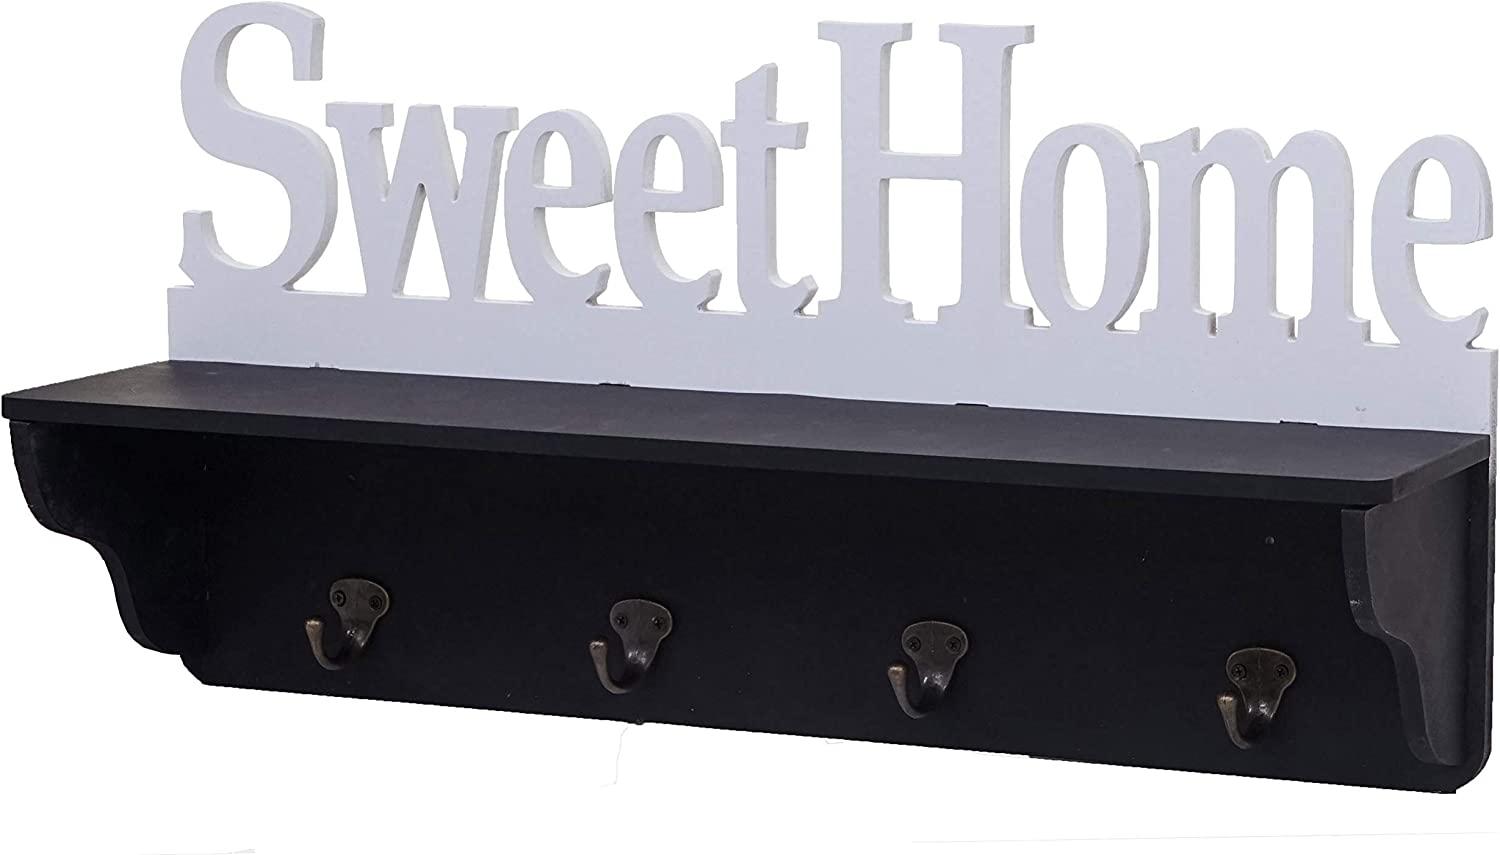 Wandgarderobe HWC-D41 Sweet Home, Garderobe Regal, 4 Haken massiv 30x60x13cm ~ schwarz/weiß Bild 1